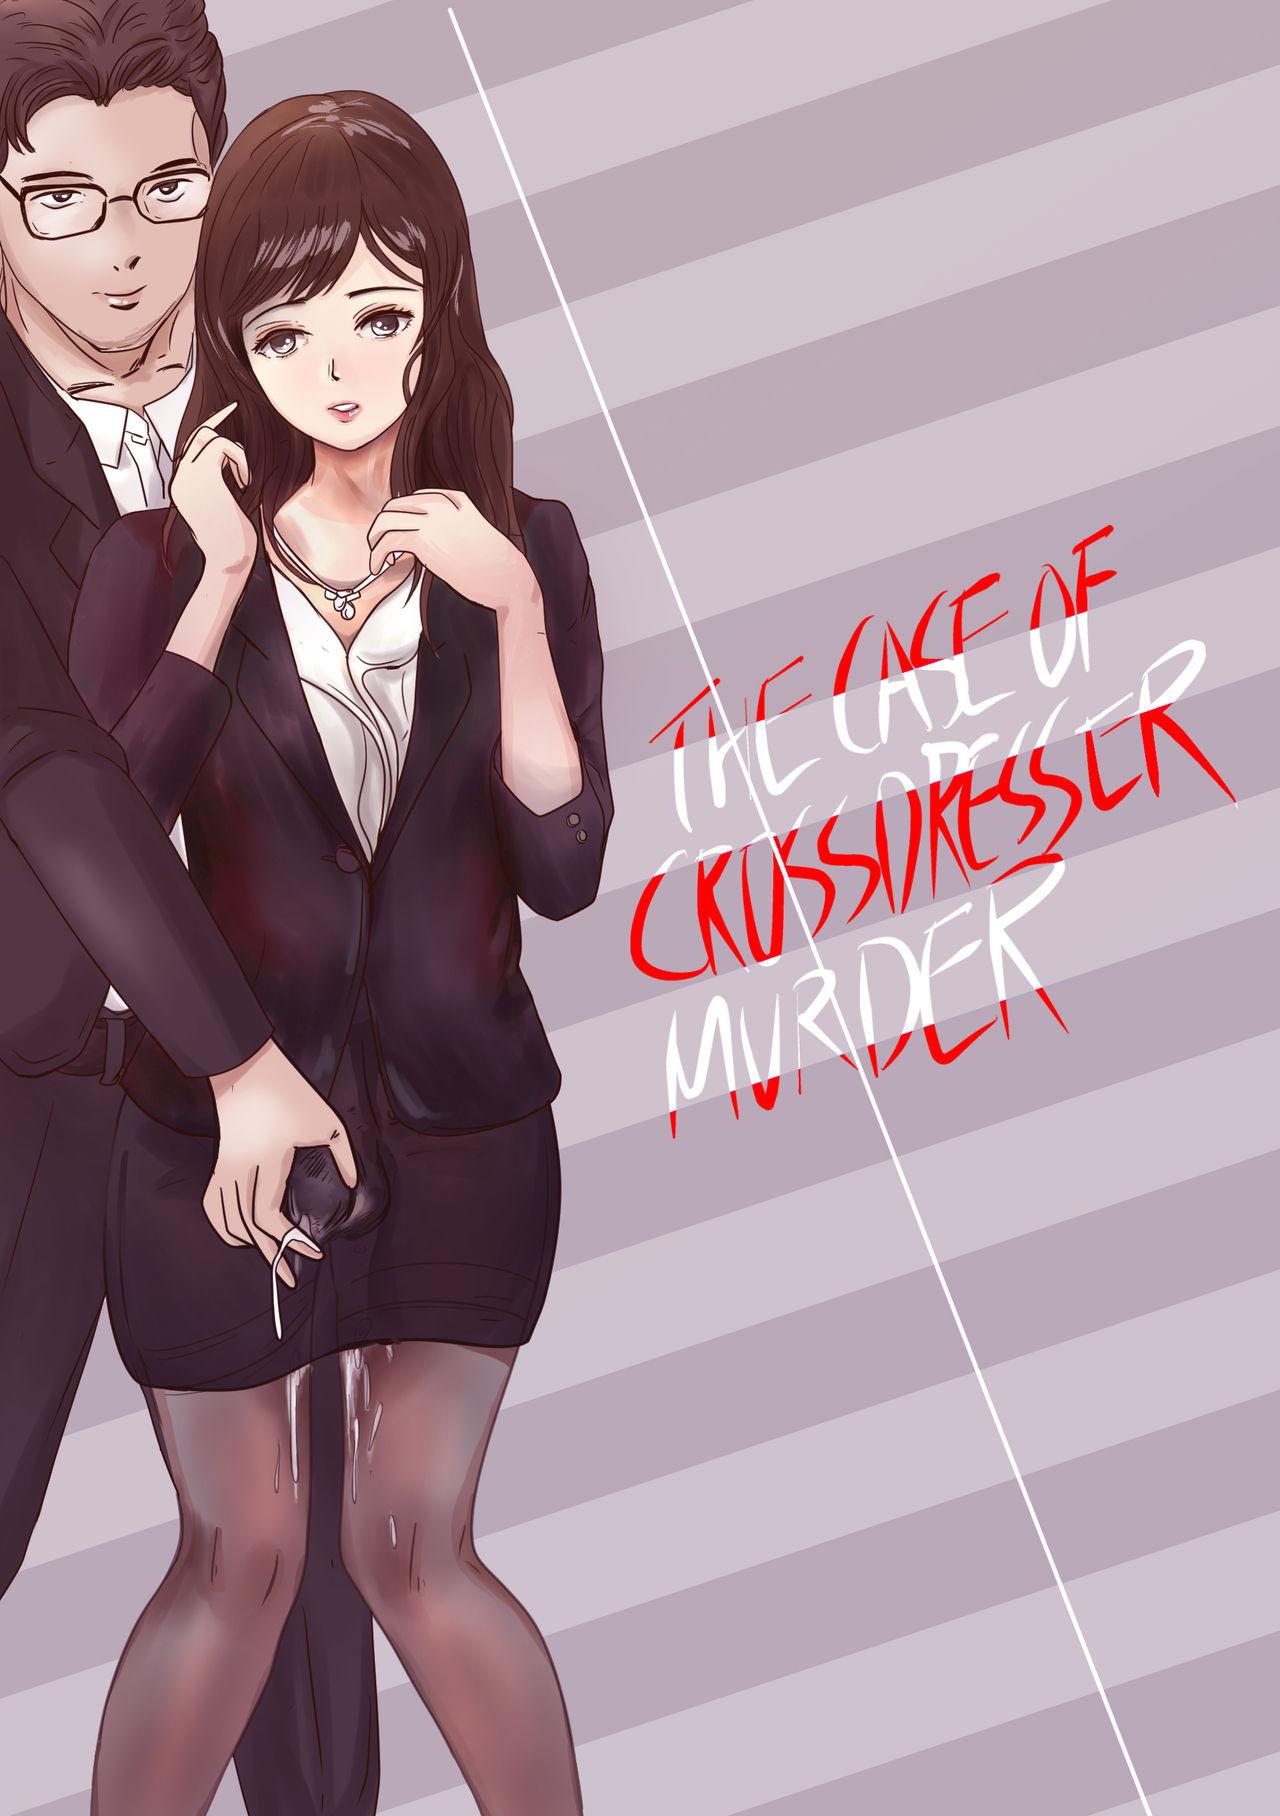 The case of crossdresser murderi(ENG)女装男子殺人事件 3